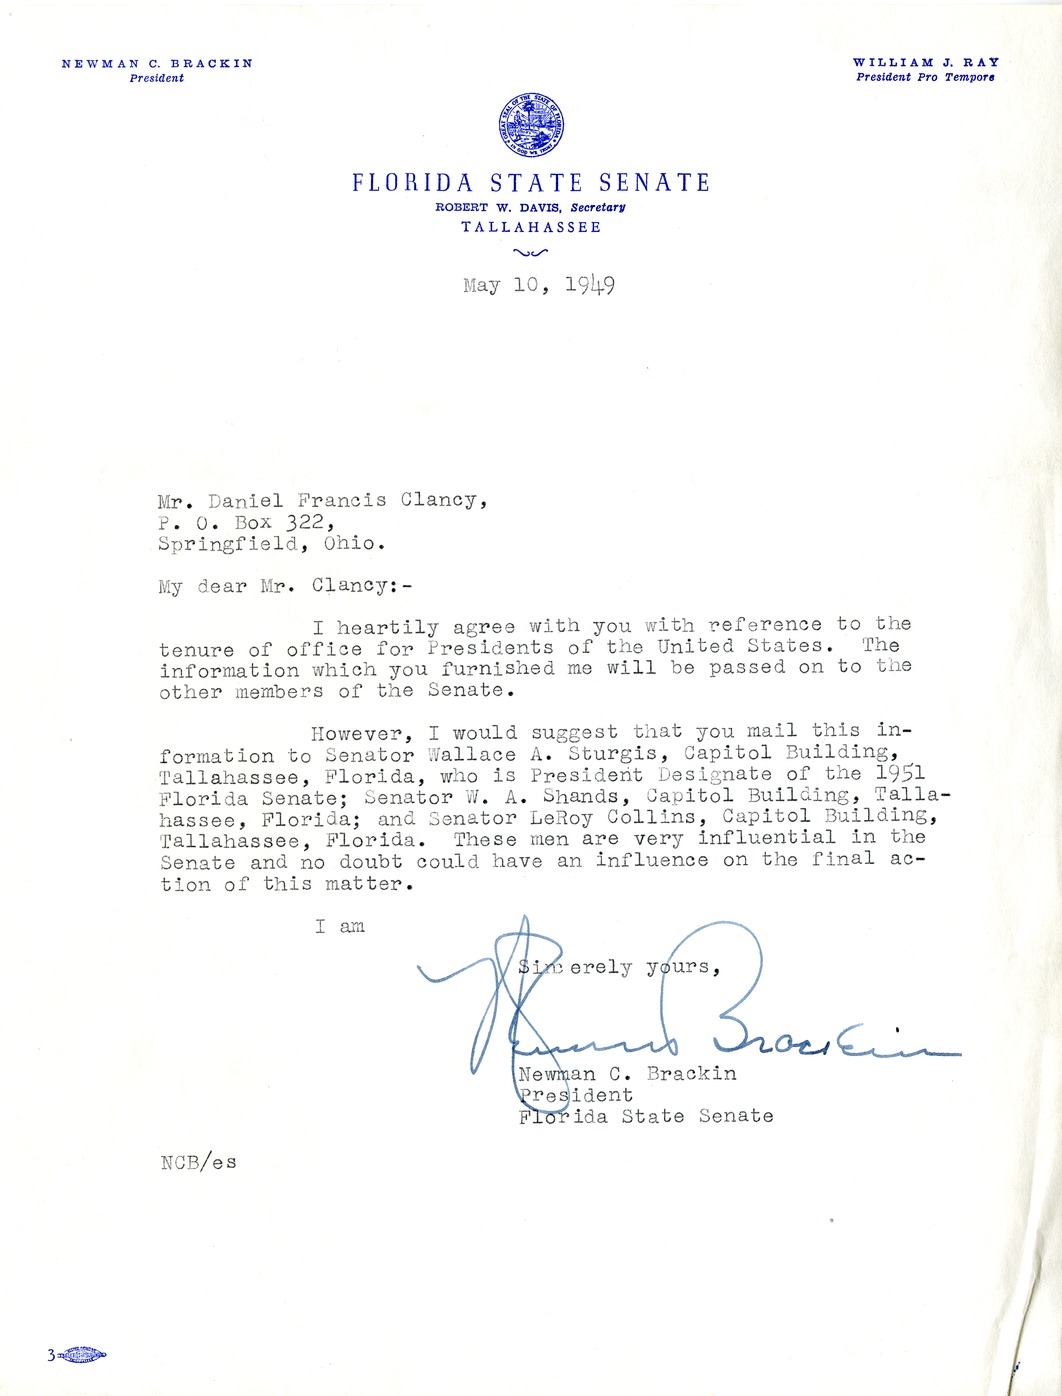 Letter from Newman C. Brackin to Daniel F. Clancy